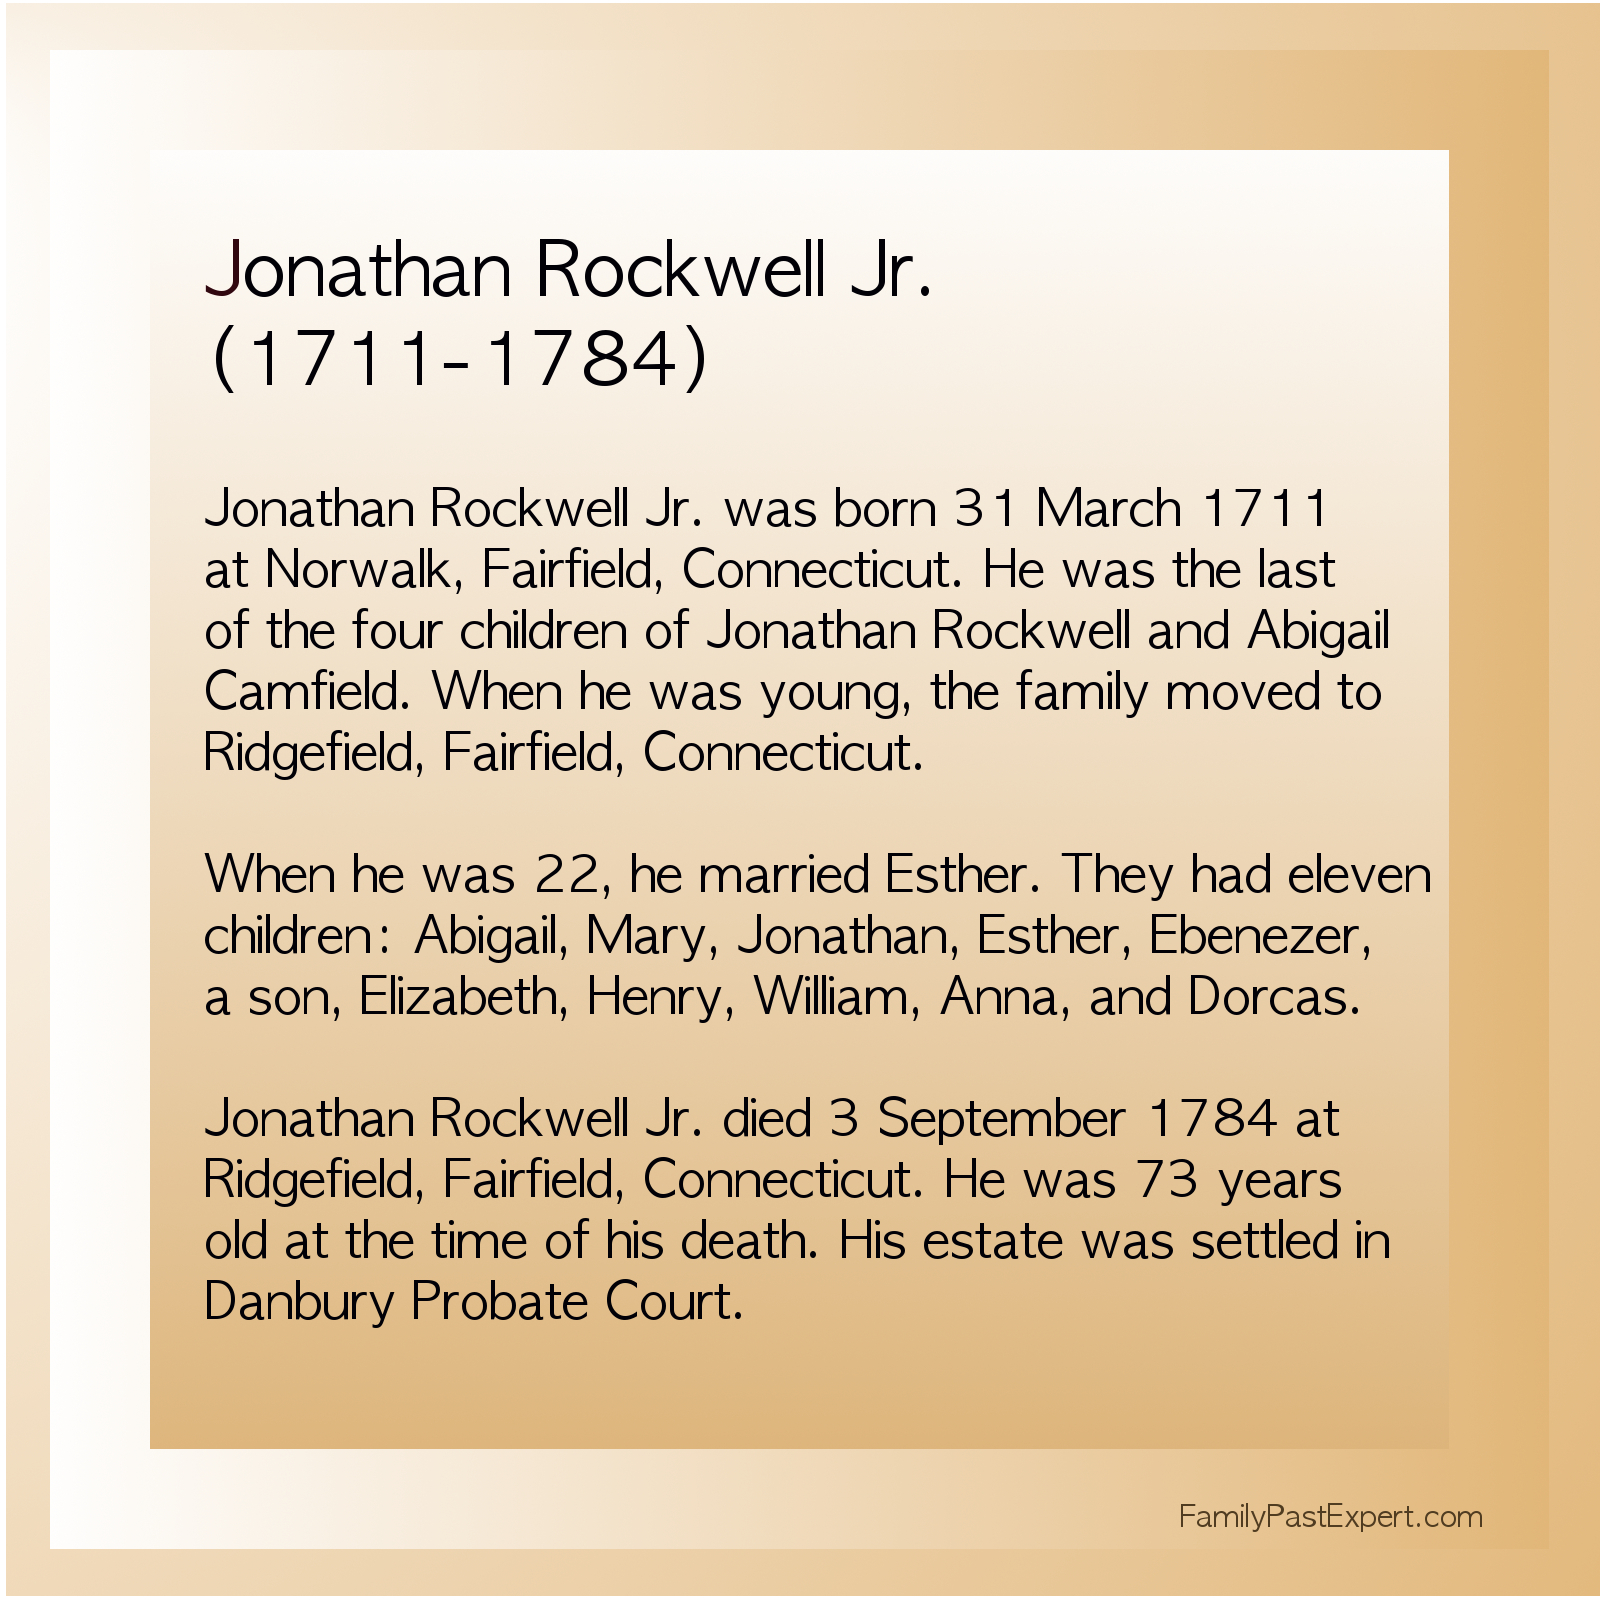 Happy Birthday Jonathan Rockwell, Jr.